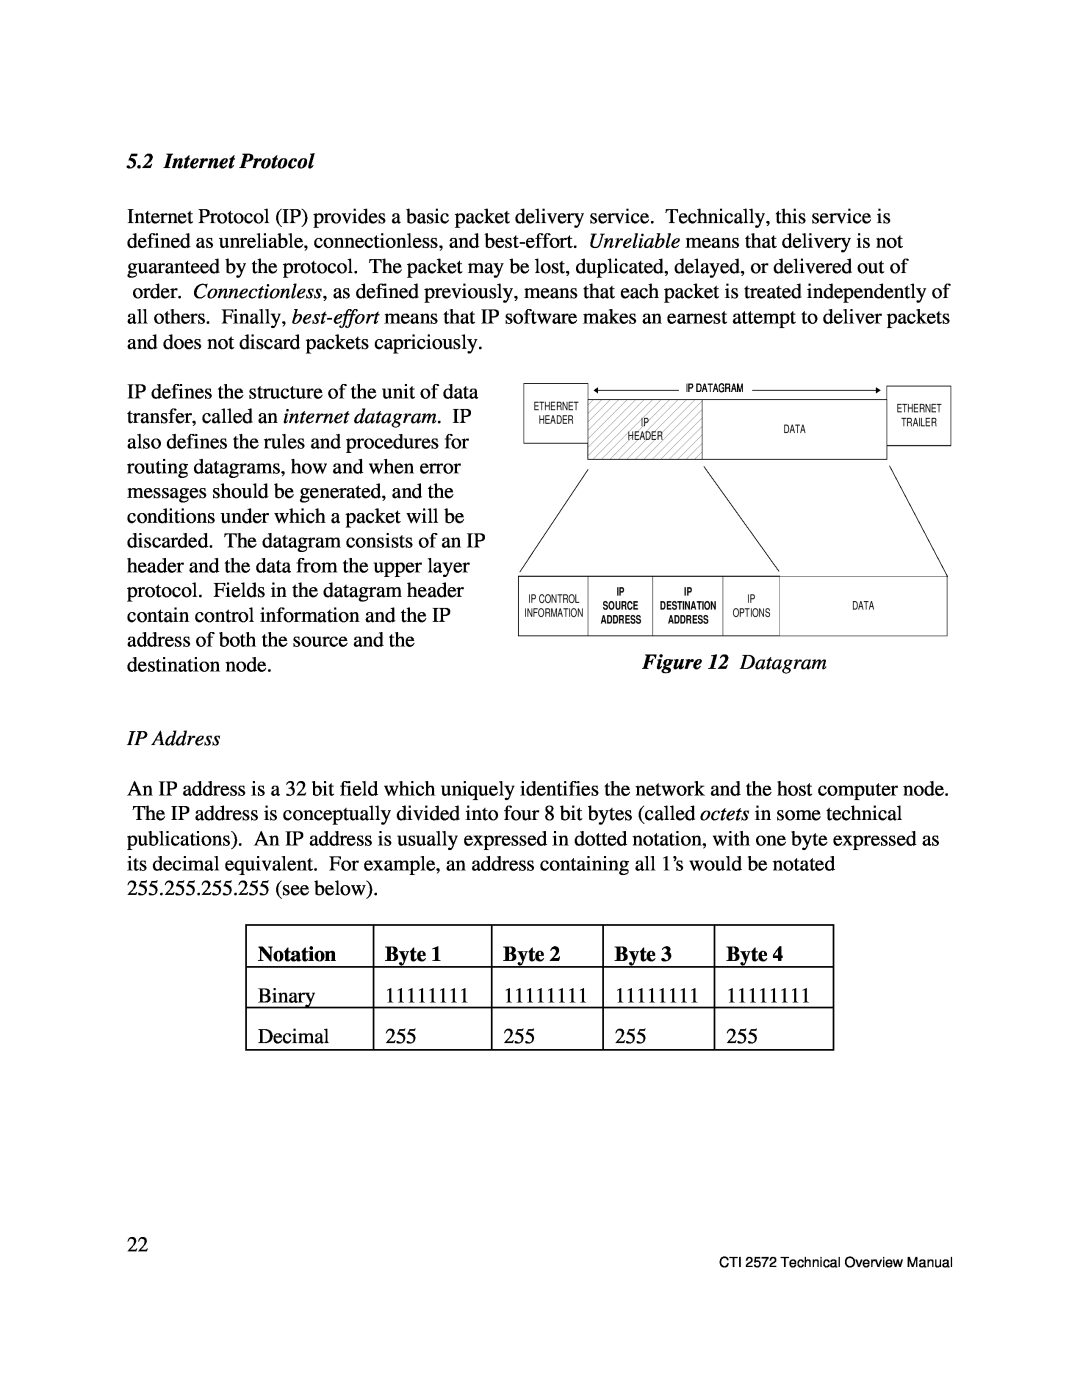 IBM CTI 2572 manual Internet Protocol, Datagram, Notation, Byte 